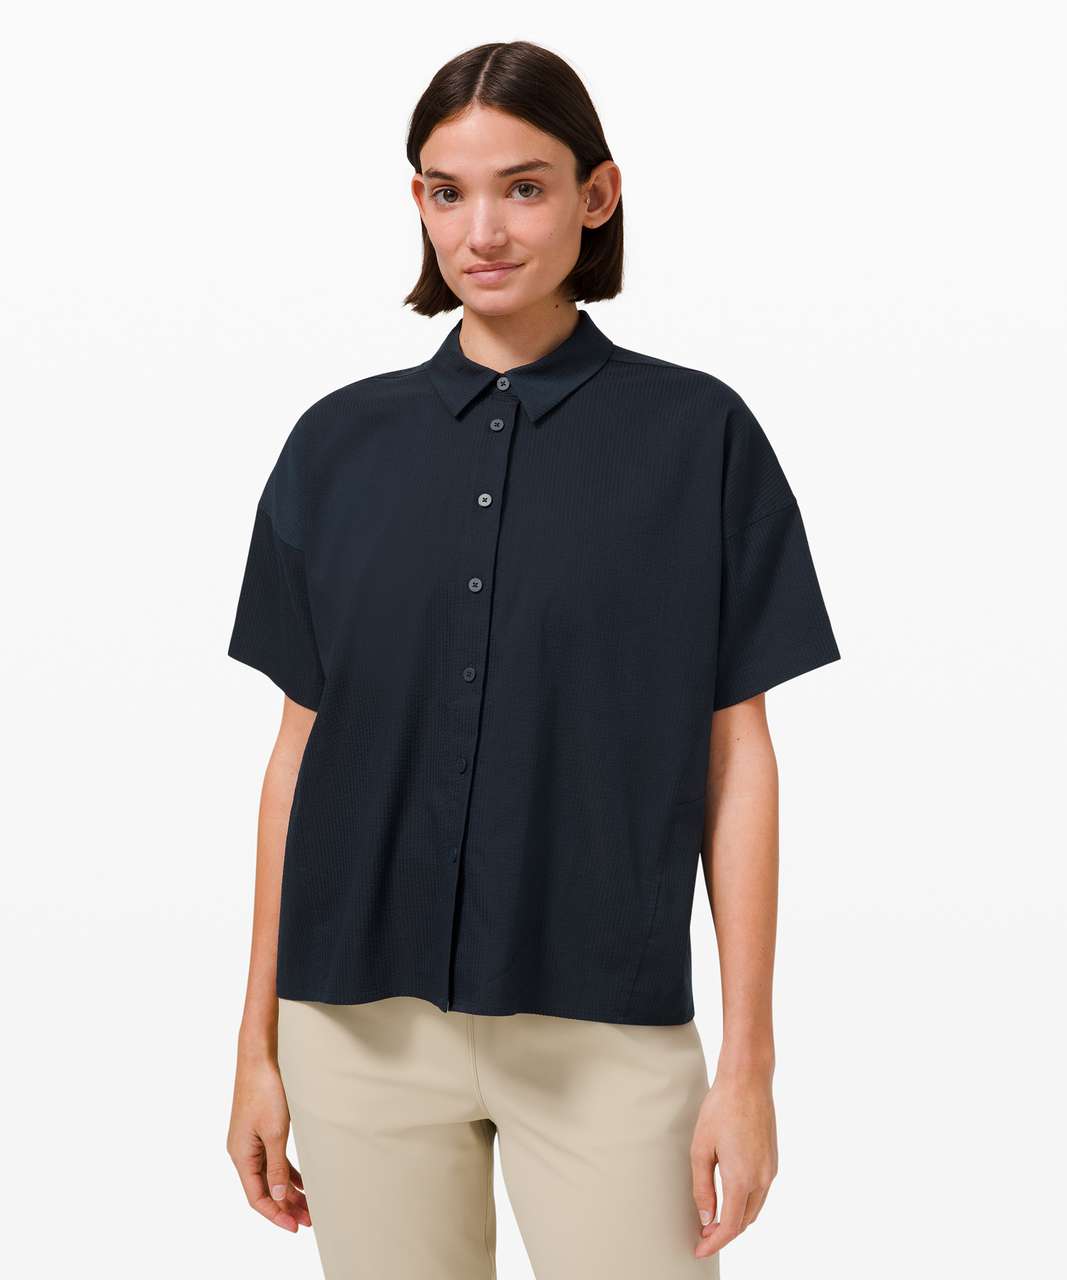 Lululemon Boxy Seersucker Short Sleeve Shirt - True Navy